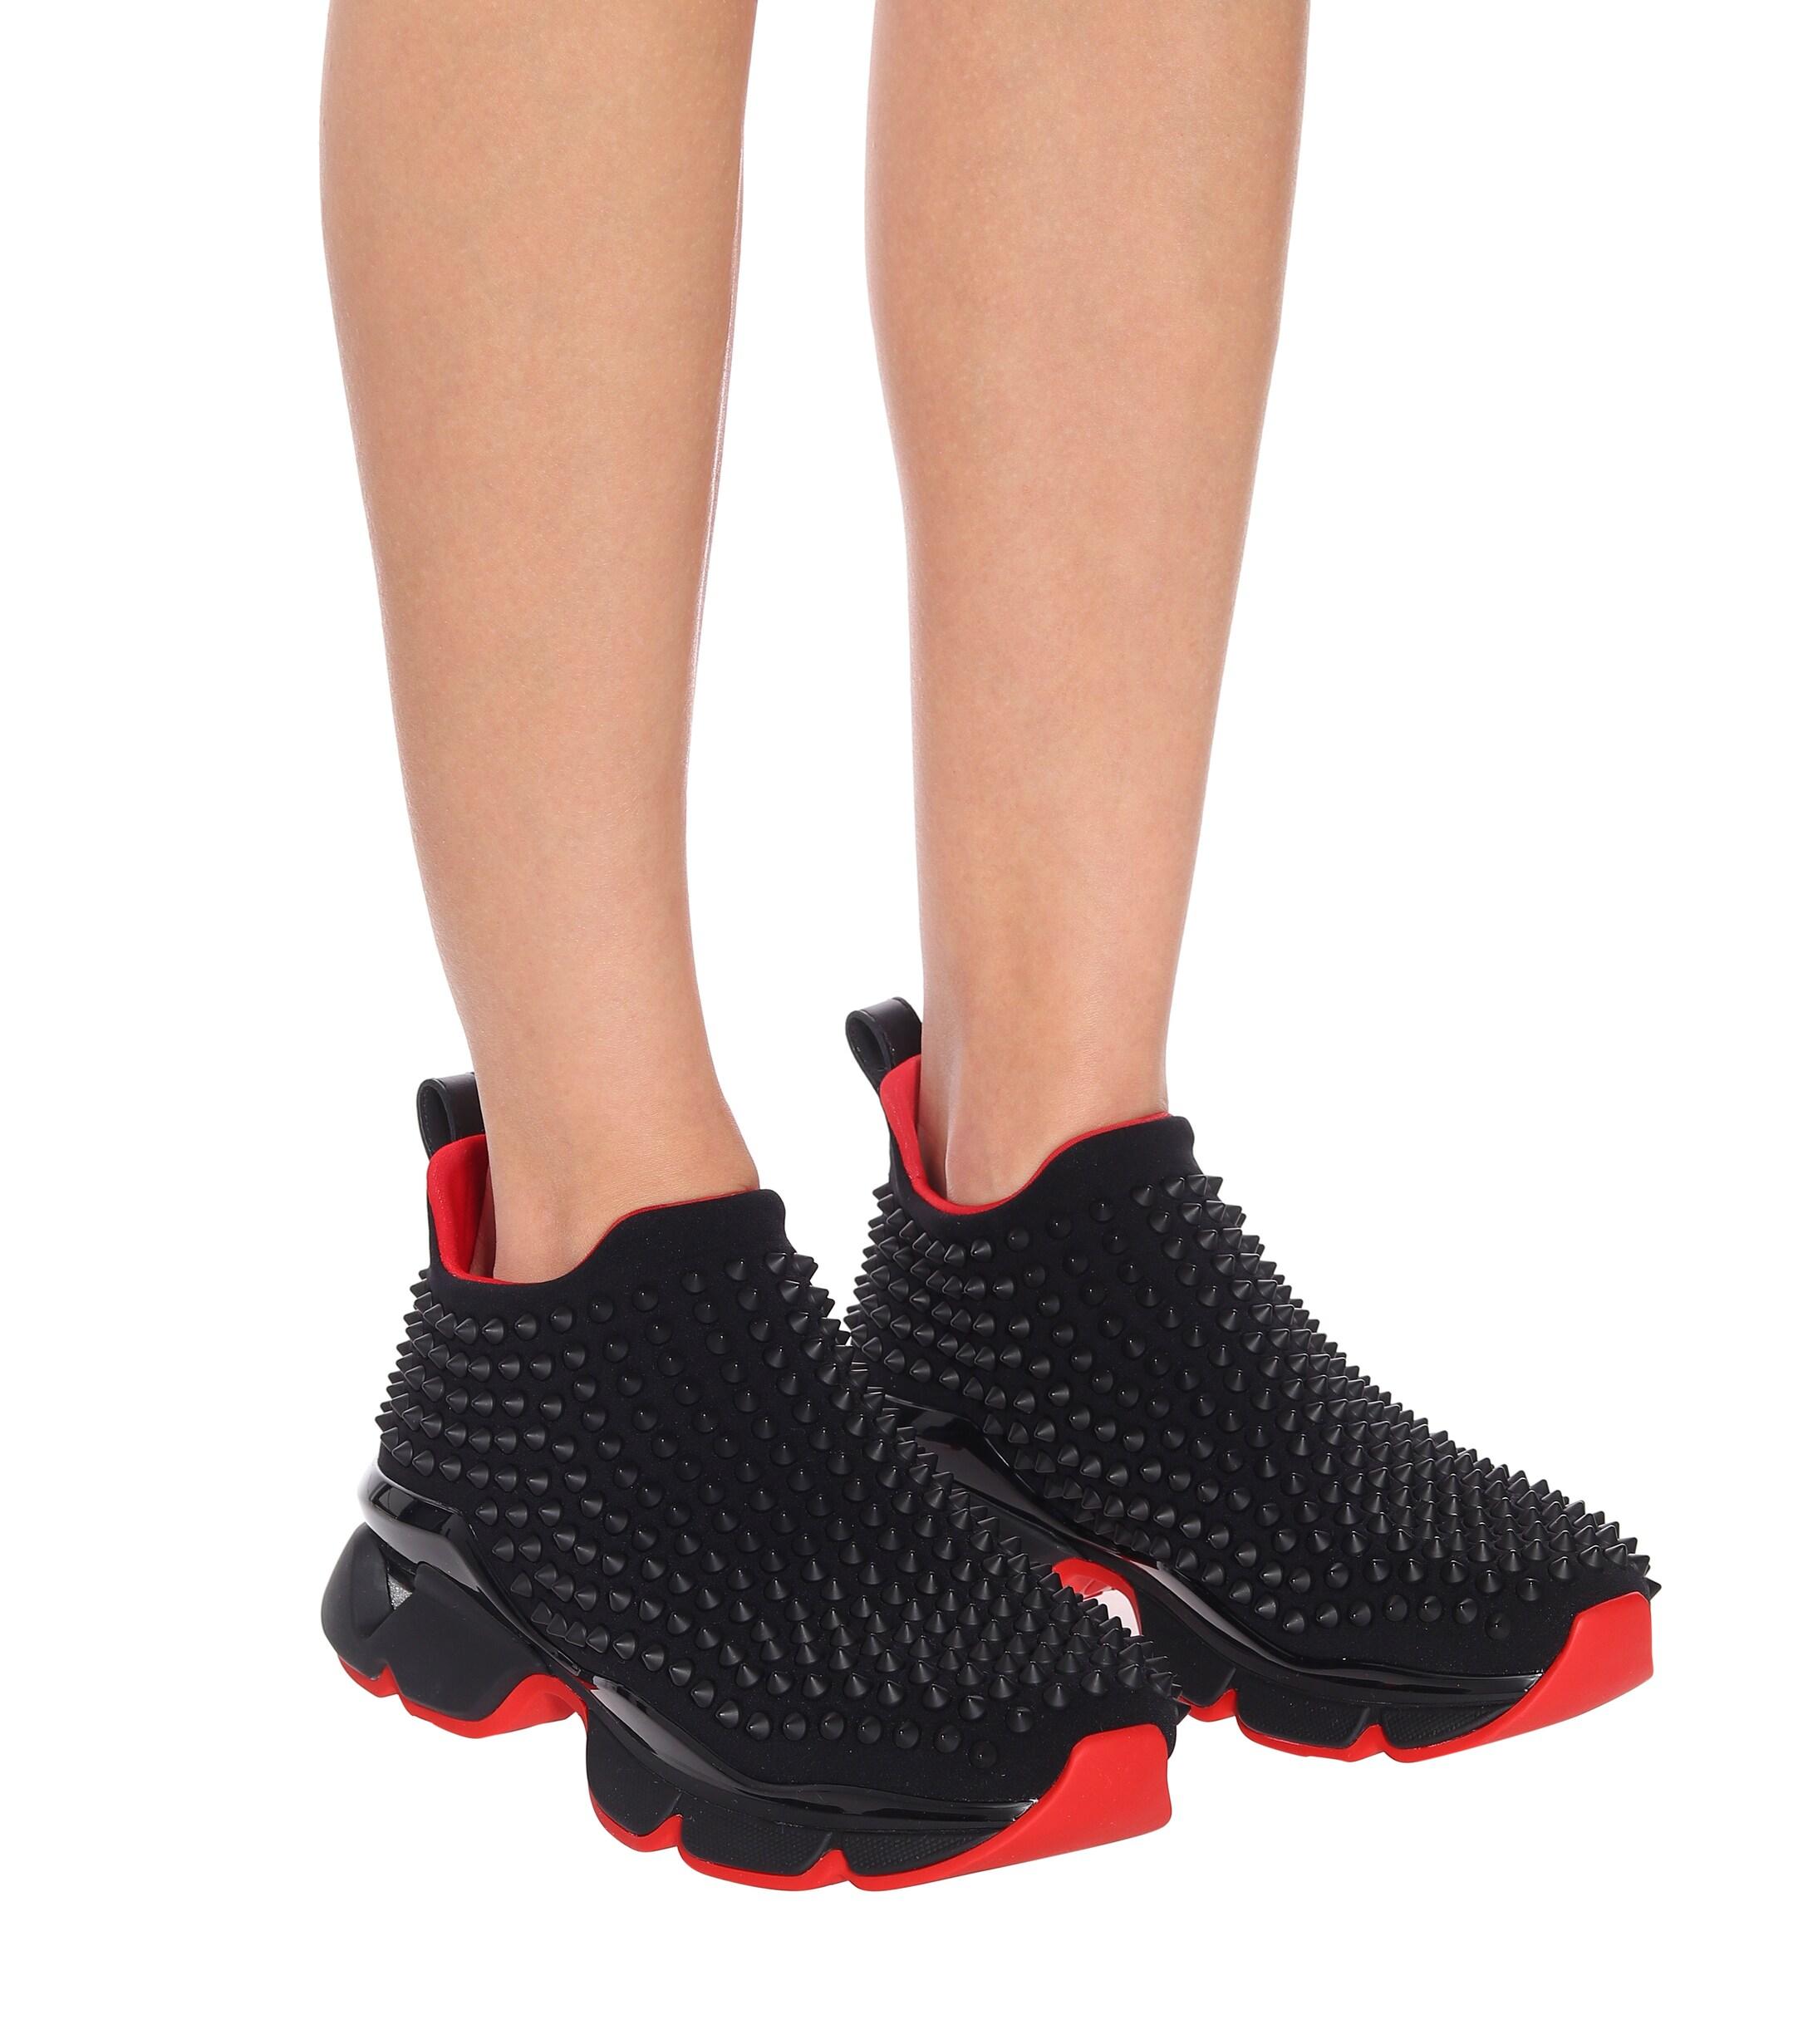 Christian Louboutin Spike Sock Donna Sneaker, $1,295